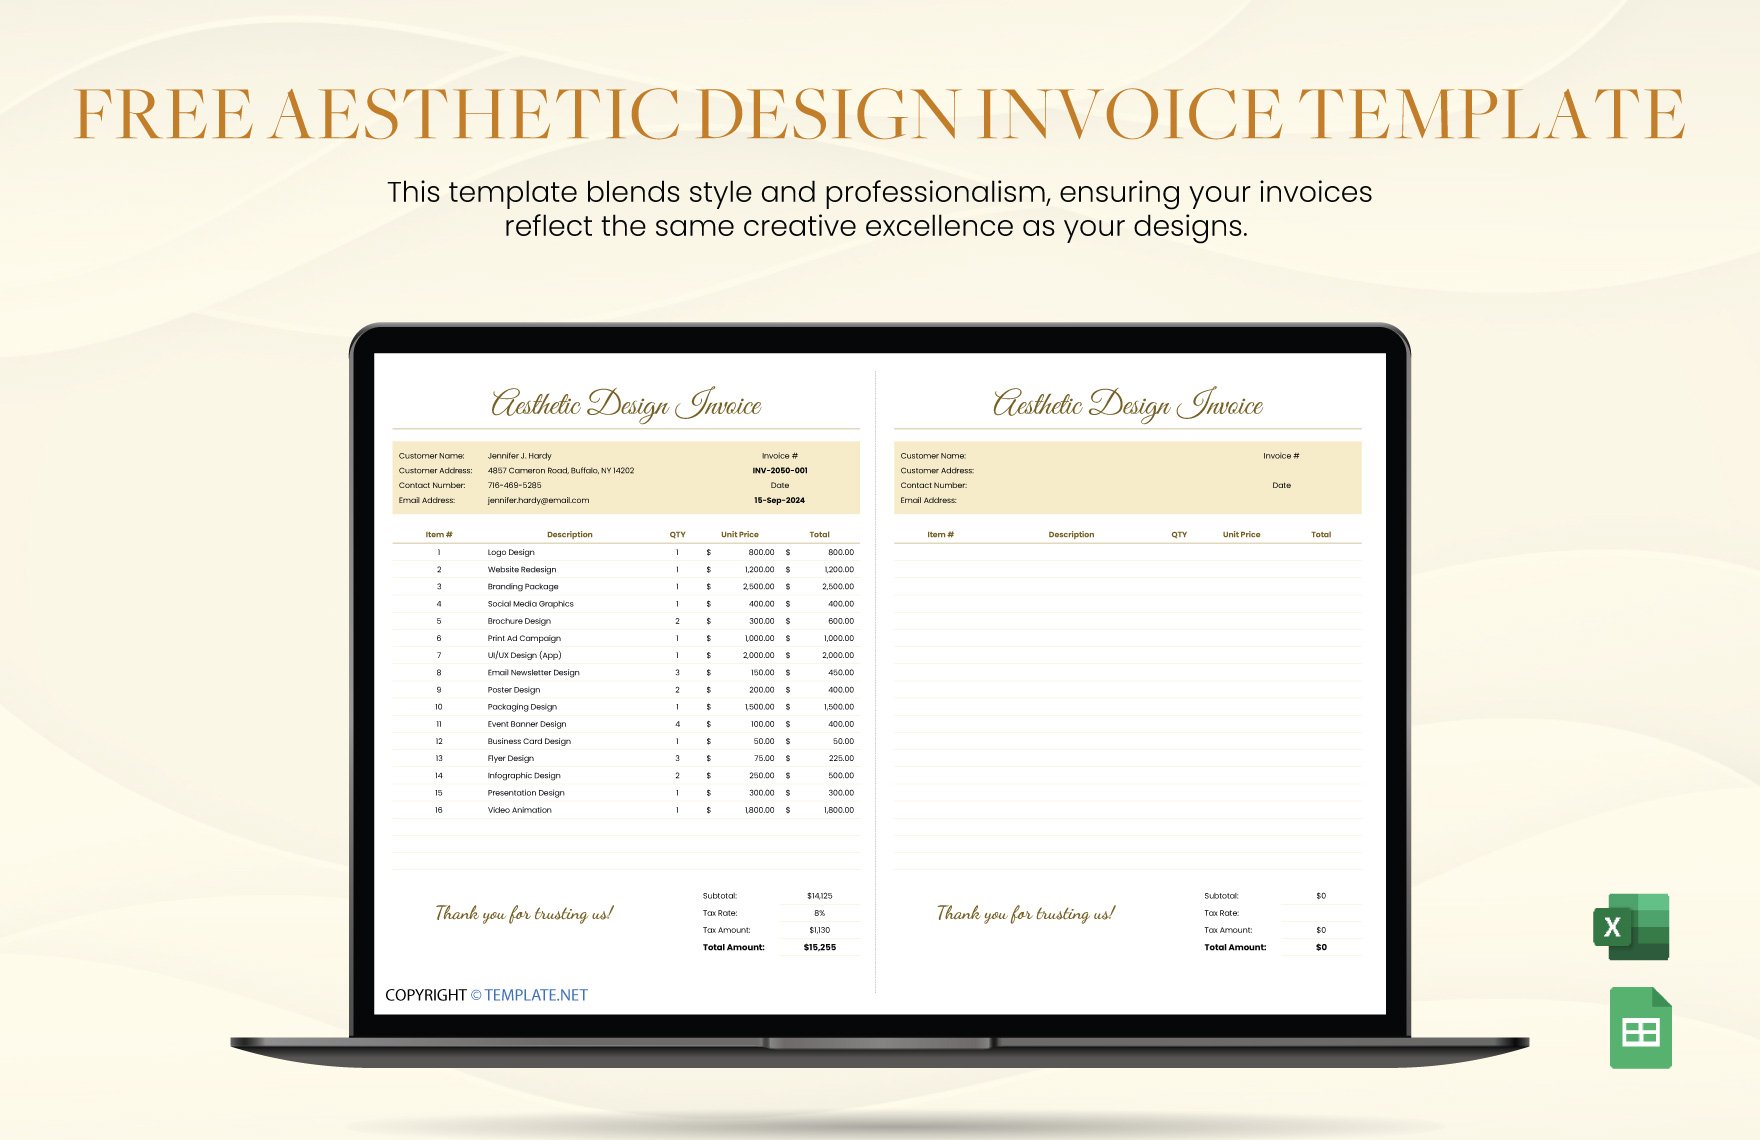 Aesthetic Design Invoice Template